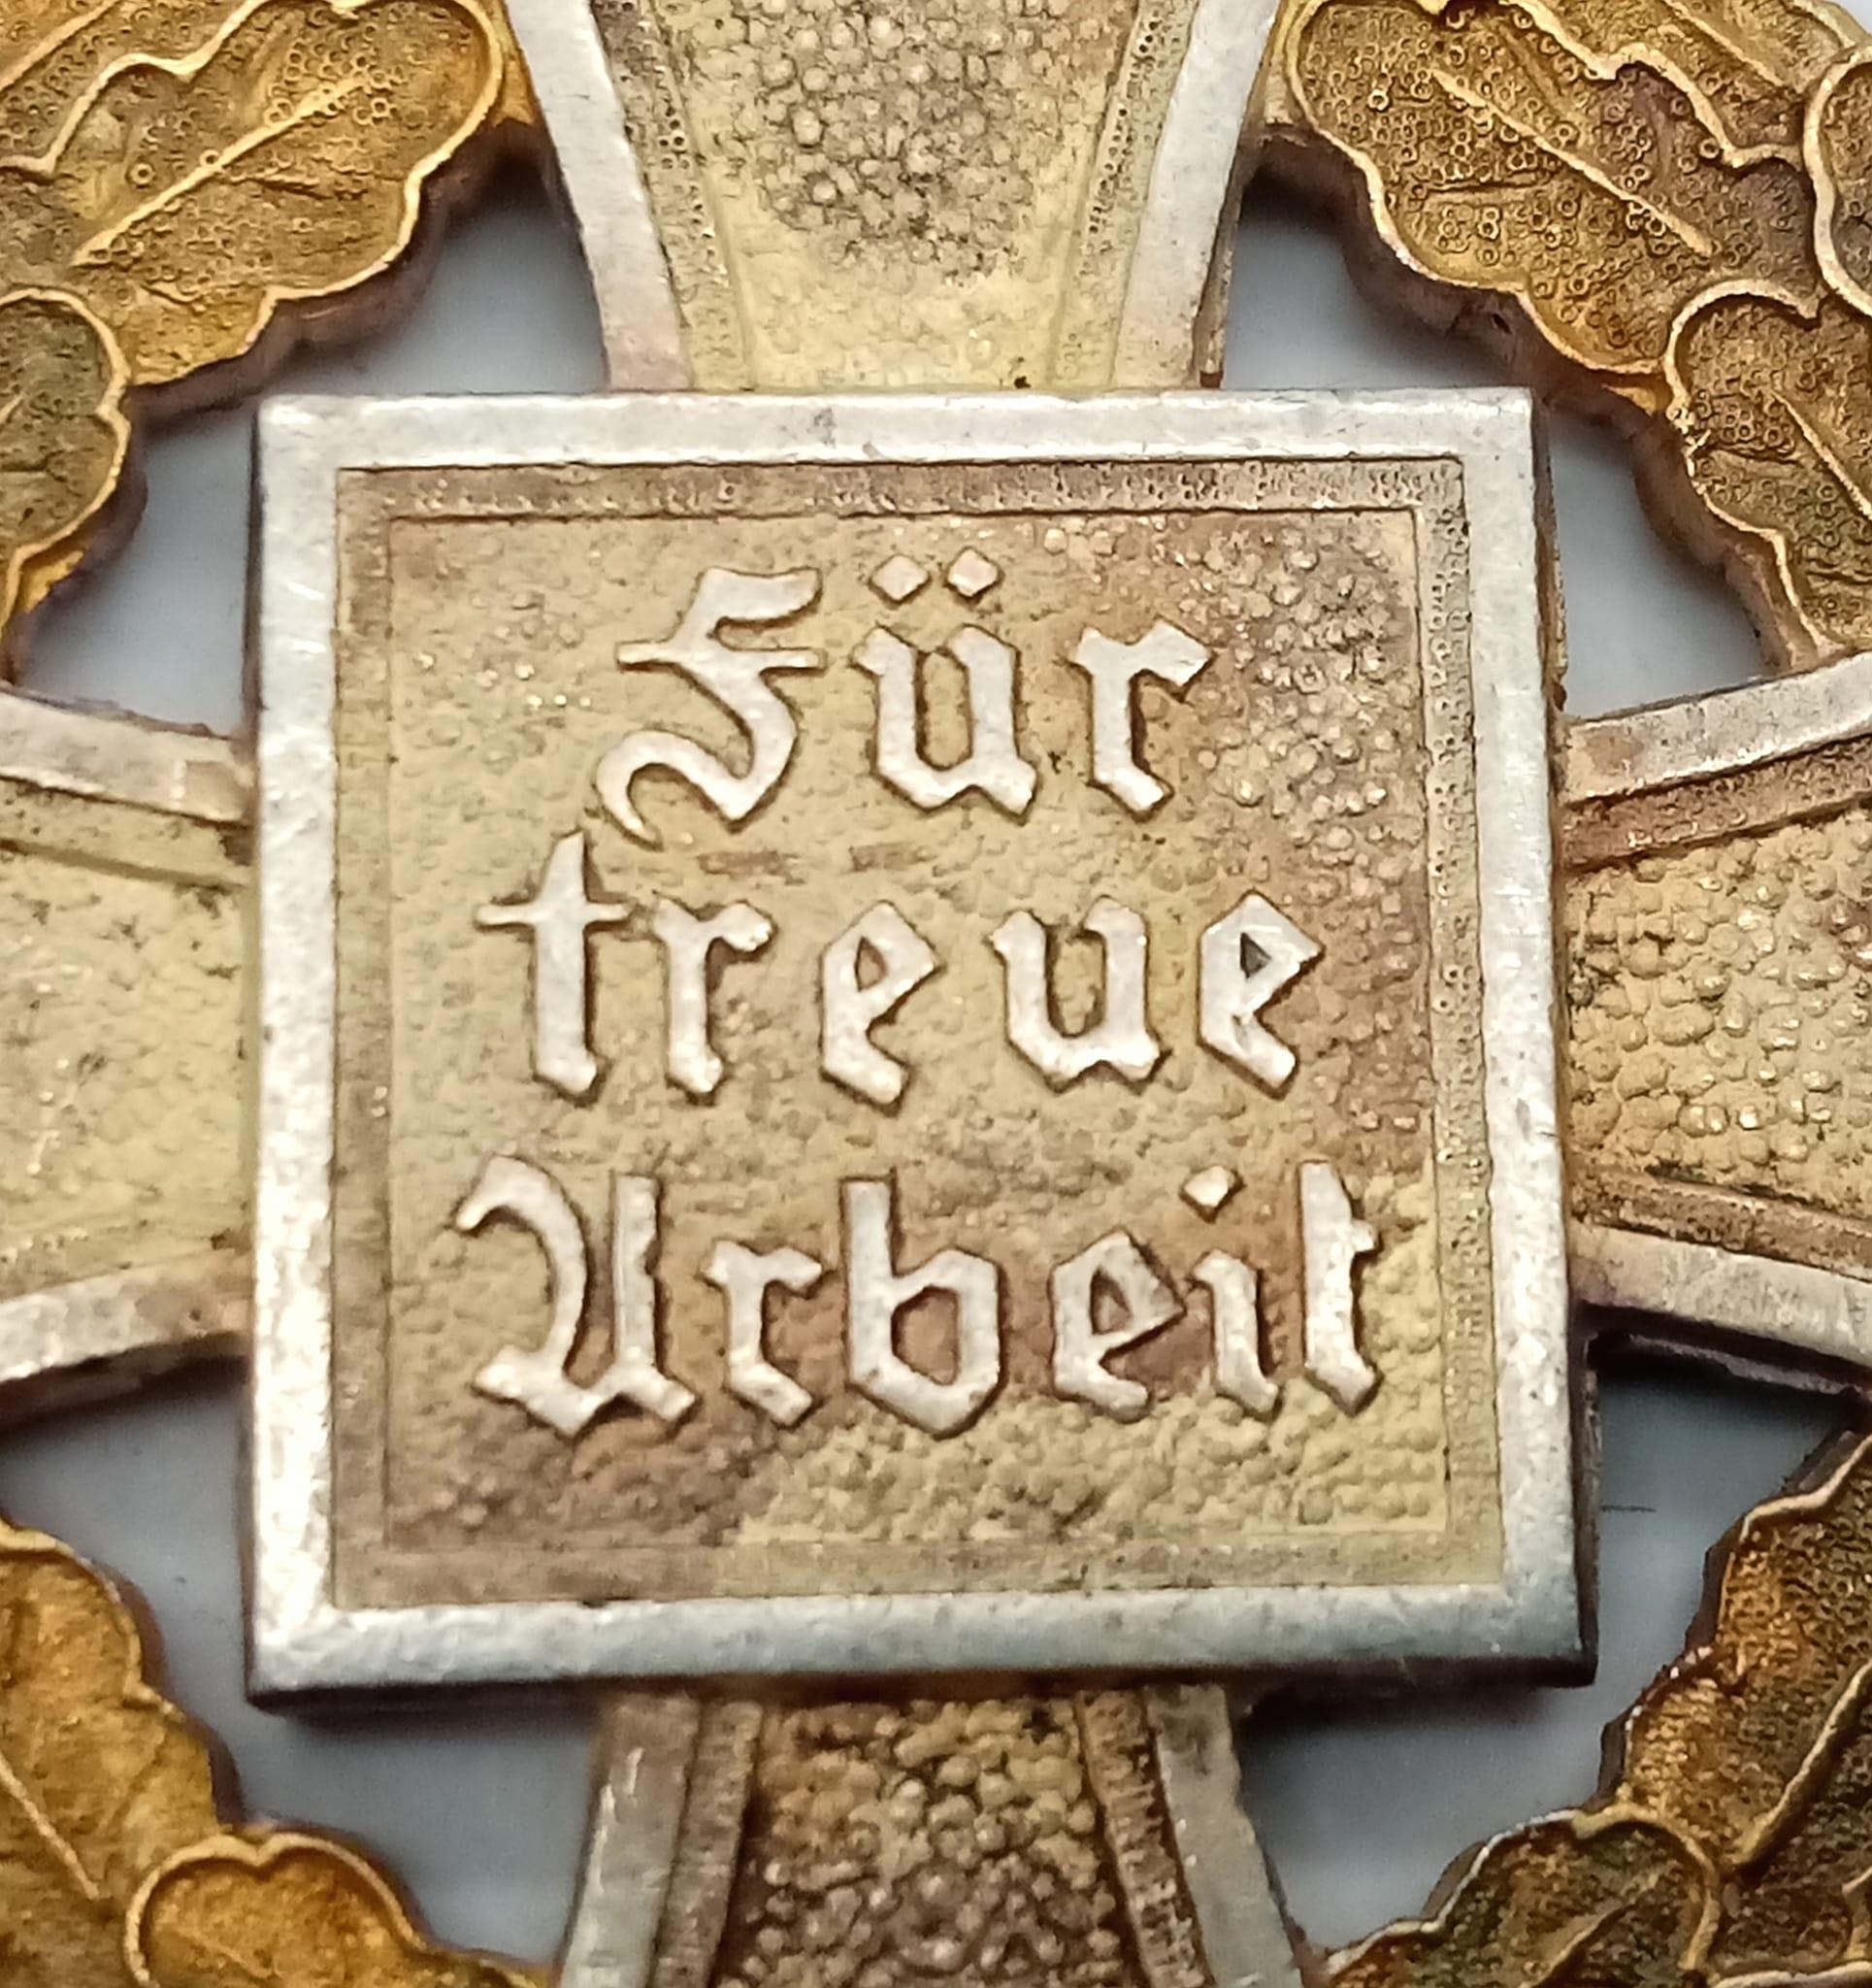 3rd Reich Civil Service 50 Year Medal “Für treue Arbeit” (“For Faithful Work”) - Image 3 of 3